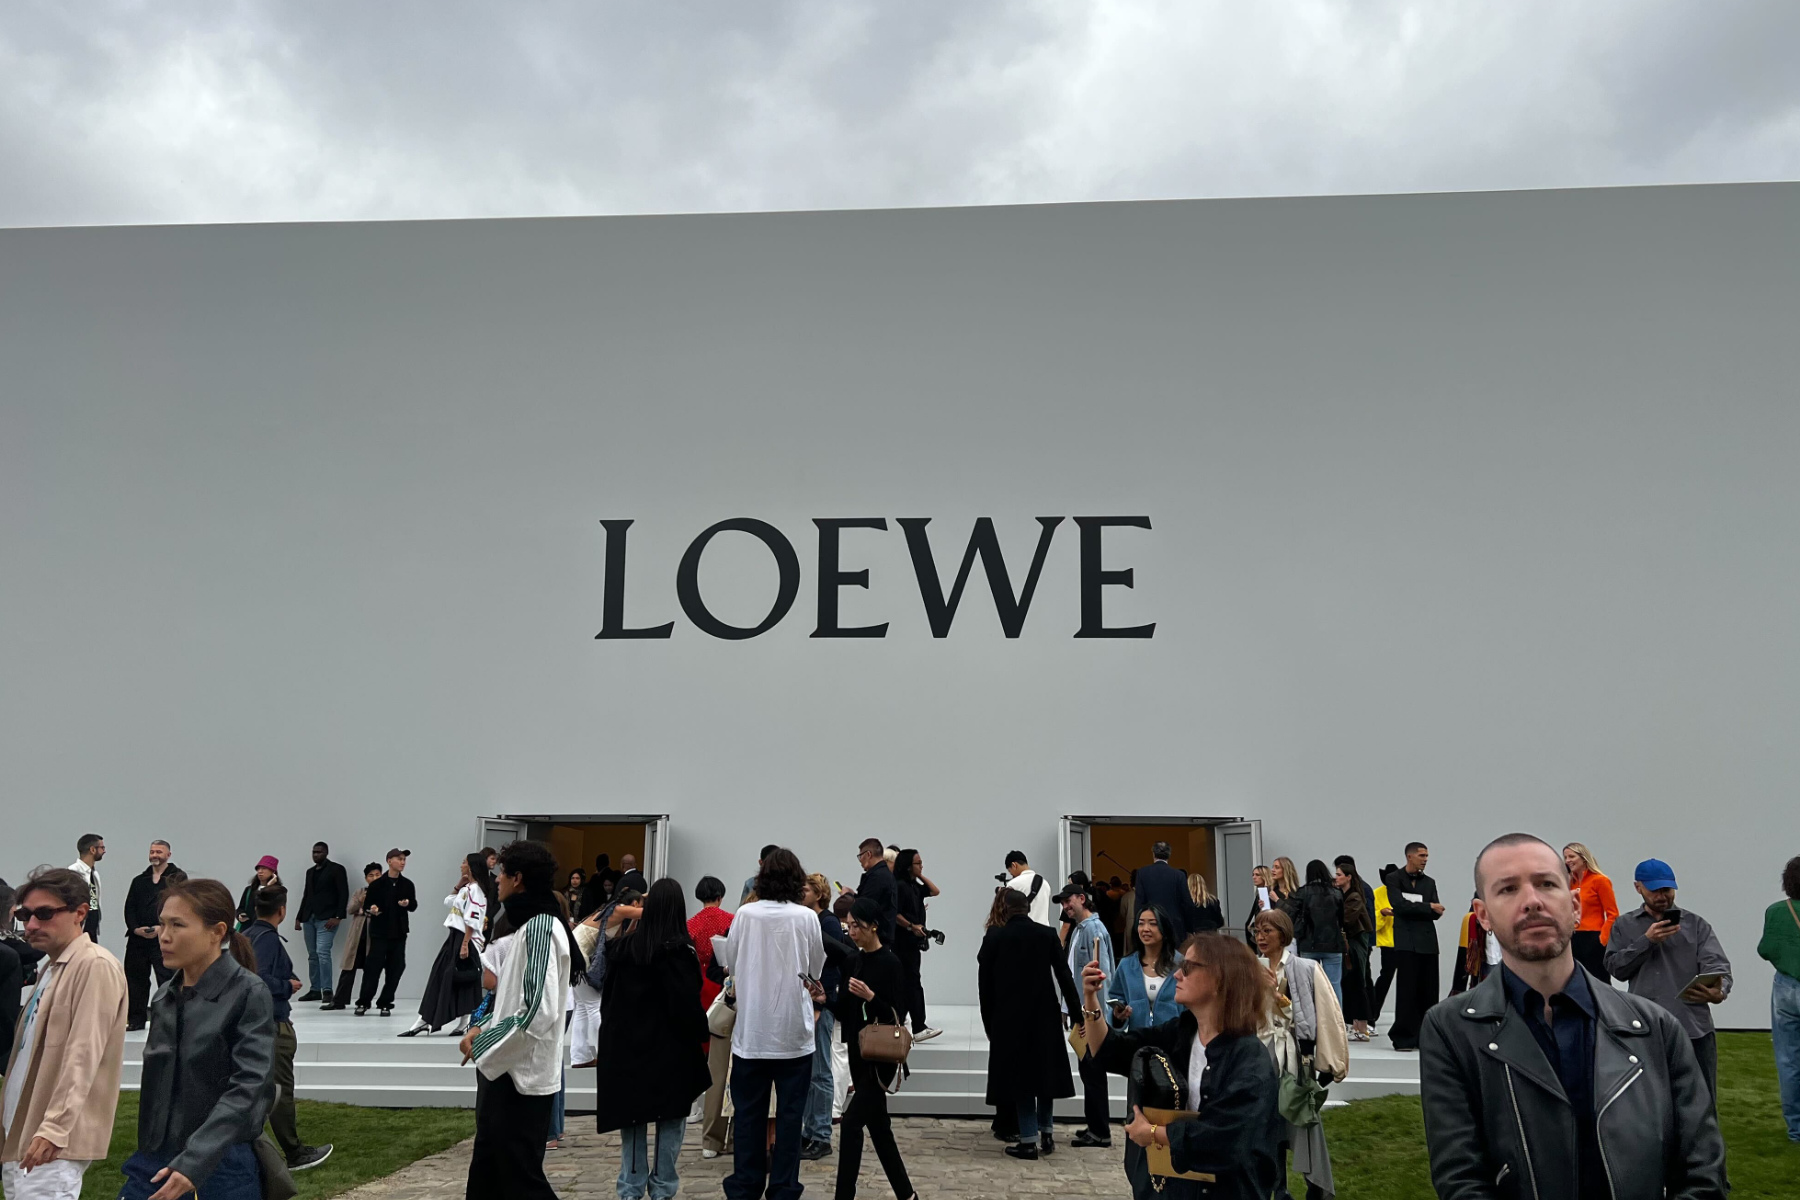 Loewe's History